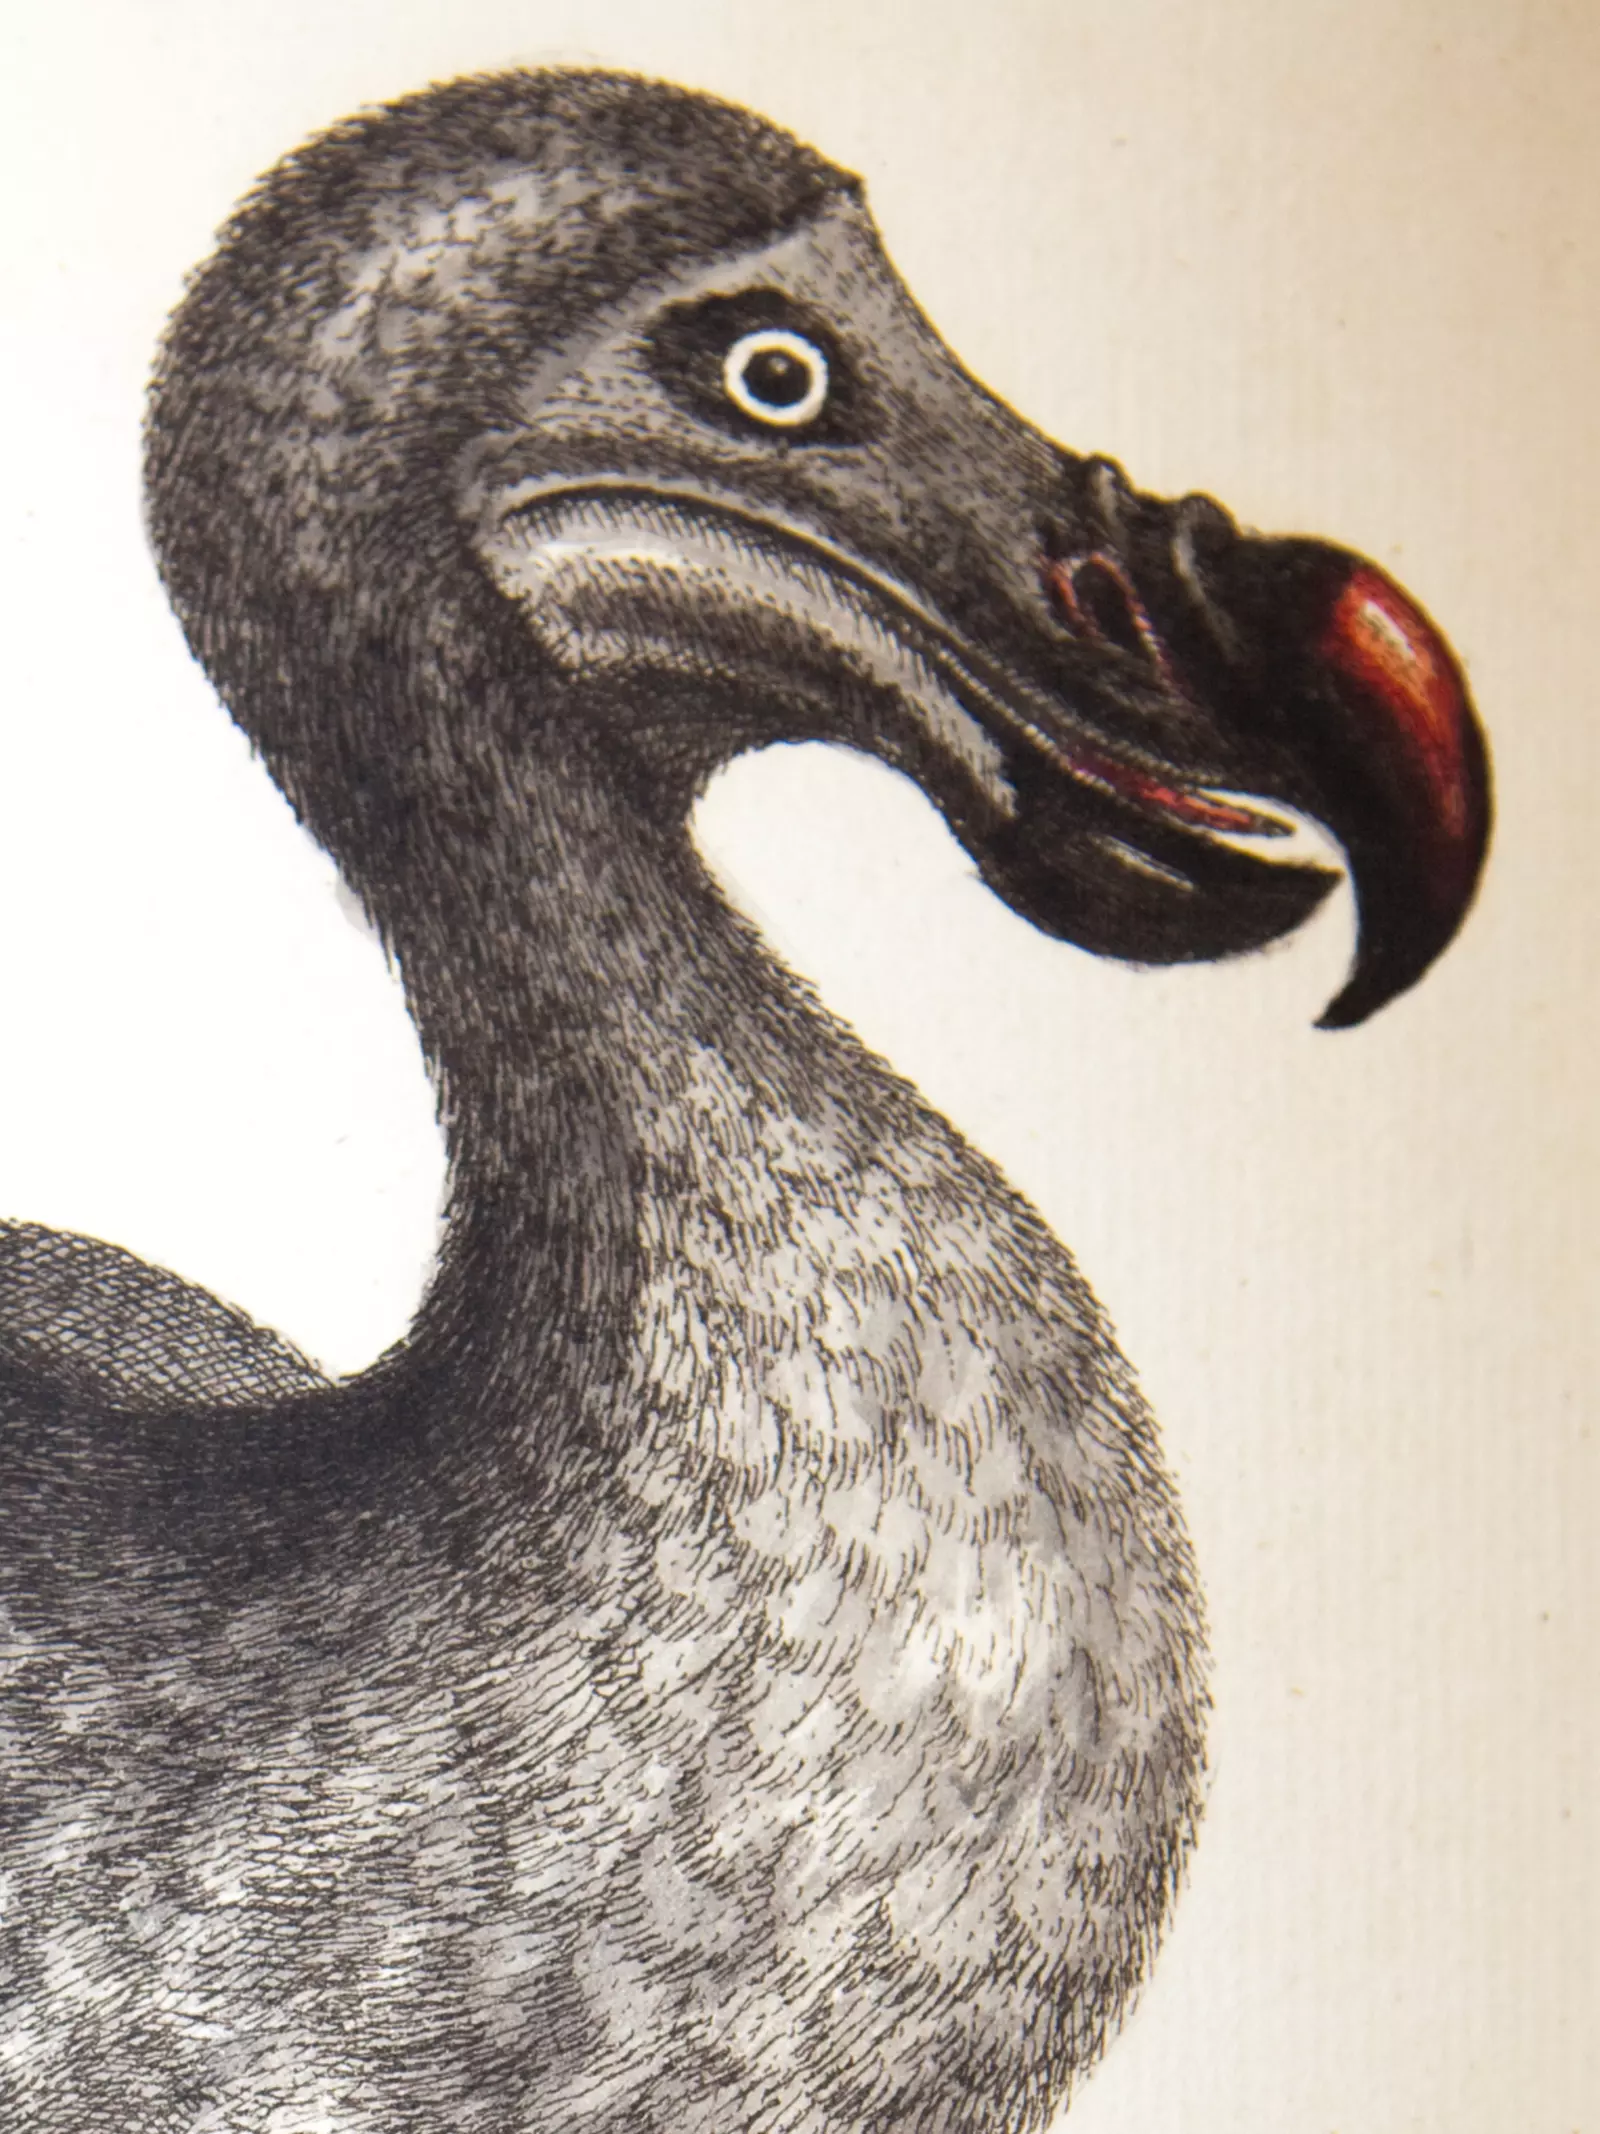 A dodo drawing